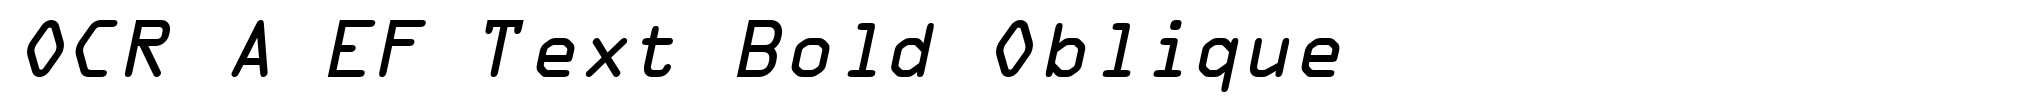 OCR A EF Text Bold Oblique image